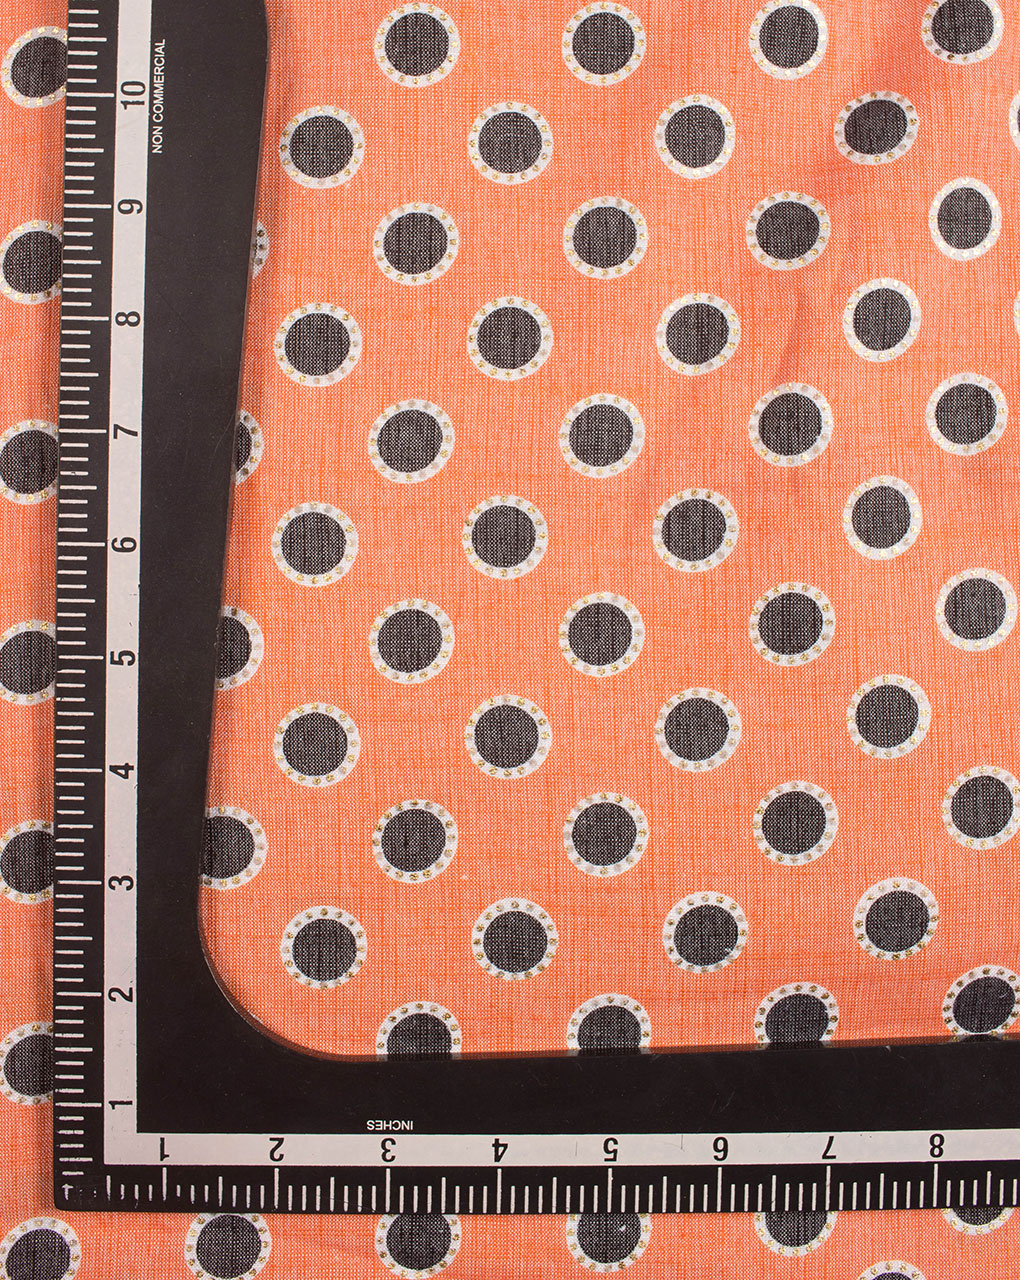 Orange Polka Dots Foil Screen Print Slub Rayon Fabric - Fabriclore.com